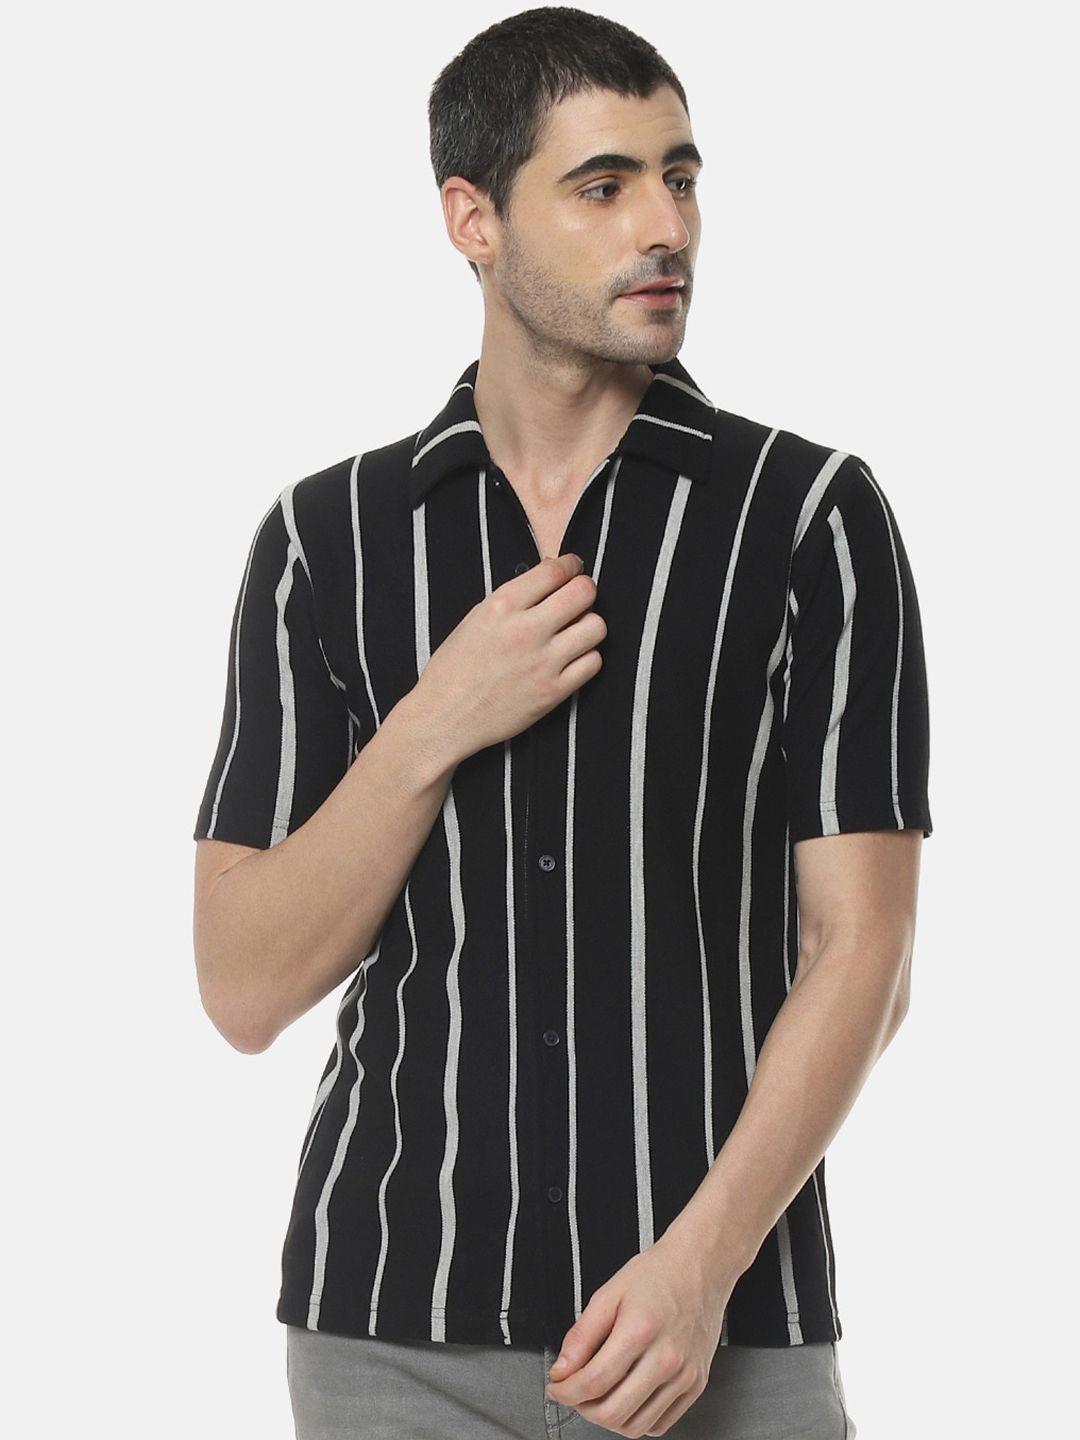 campus sutra black classic striped spread collar cotton shirt